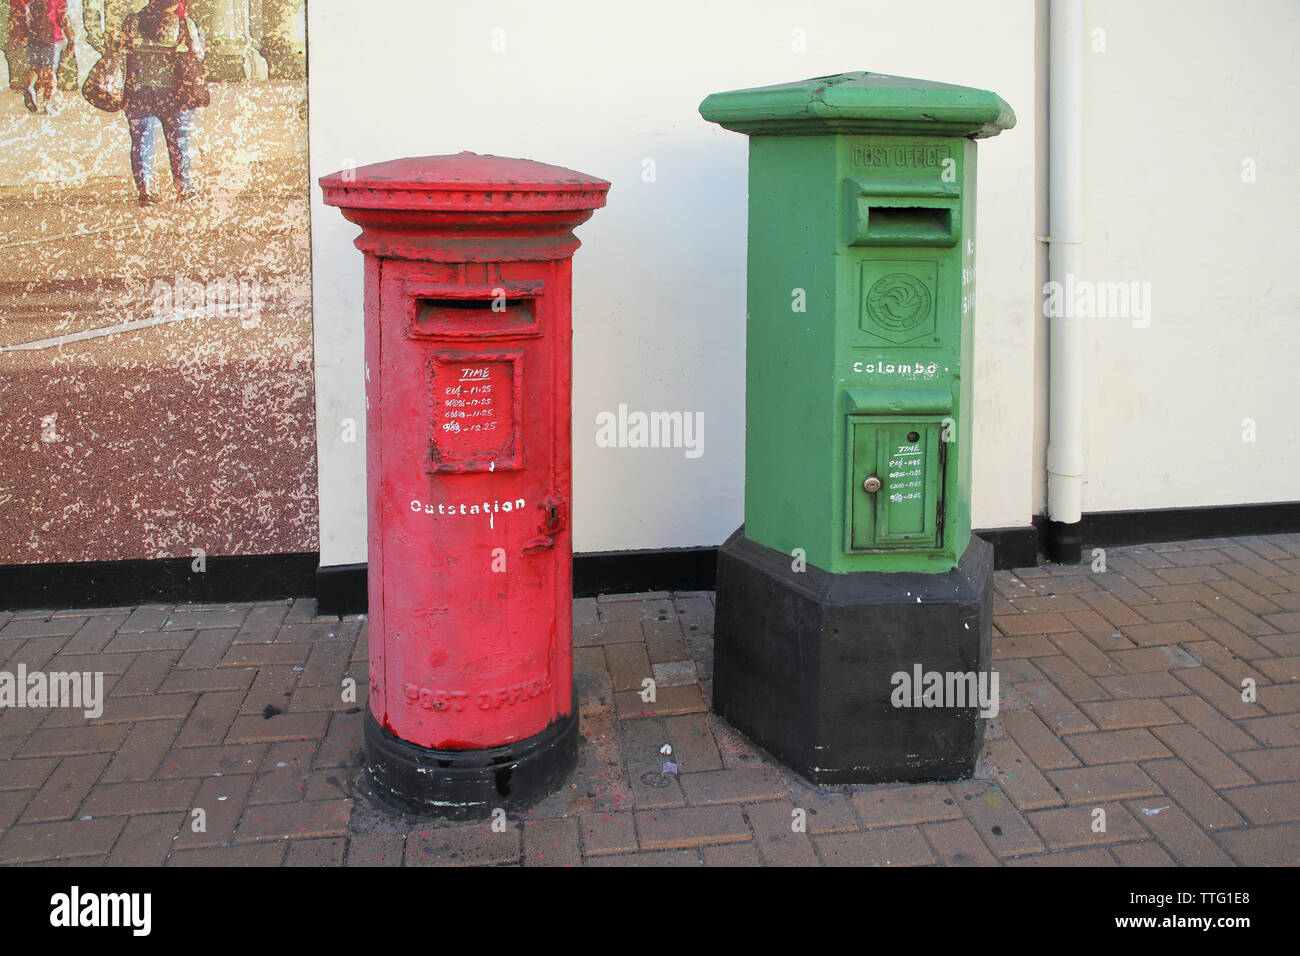 Green screen letterbox